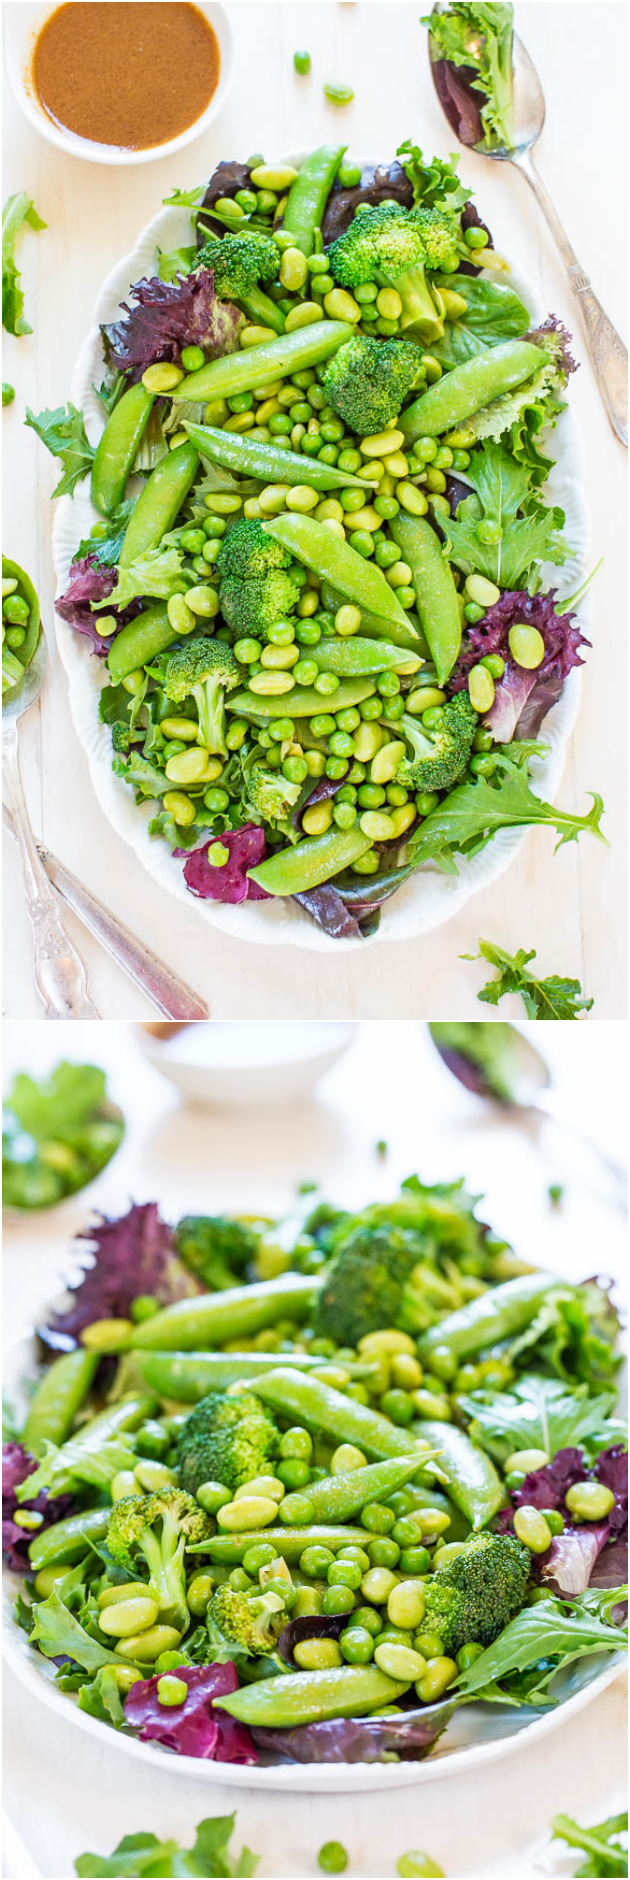 Green Powerhouse Salad with Sesame-Ginger Vinaigrette (vegan, GF) - Want to feel better, stronger, healthier? This salad does wonders!